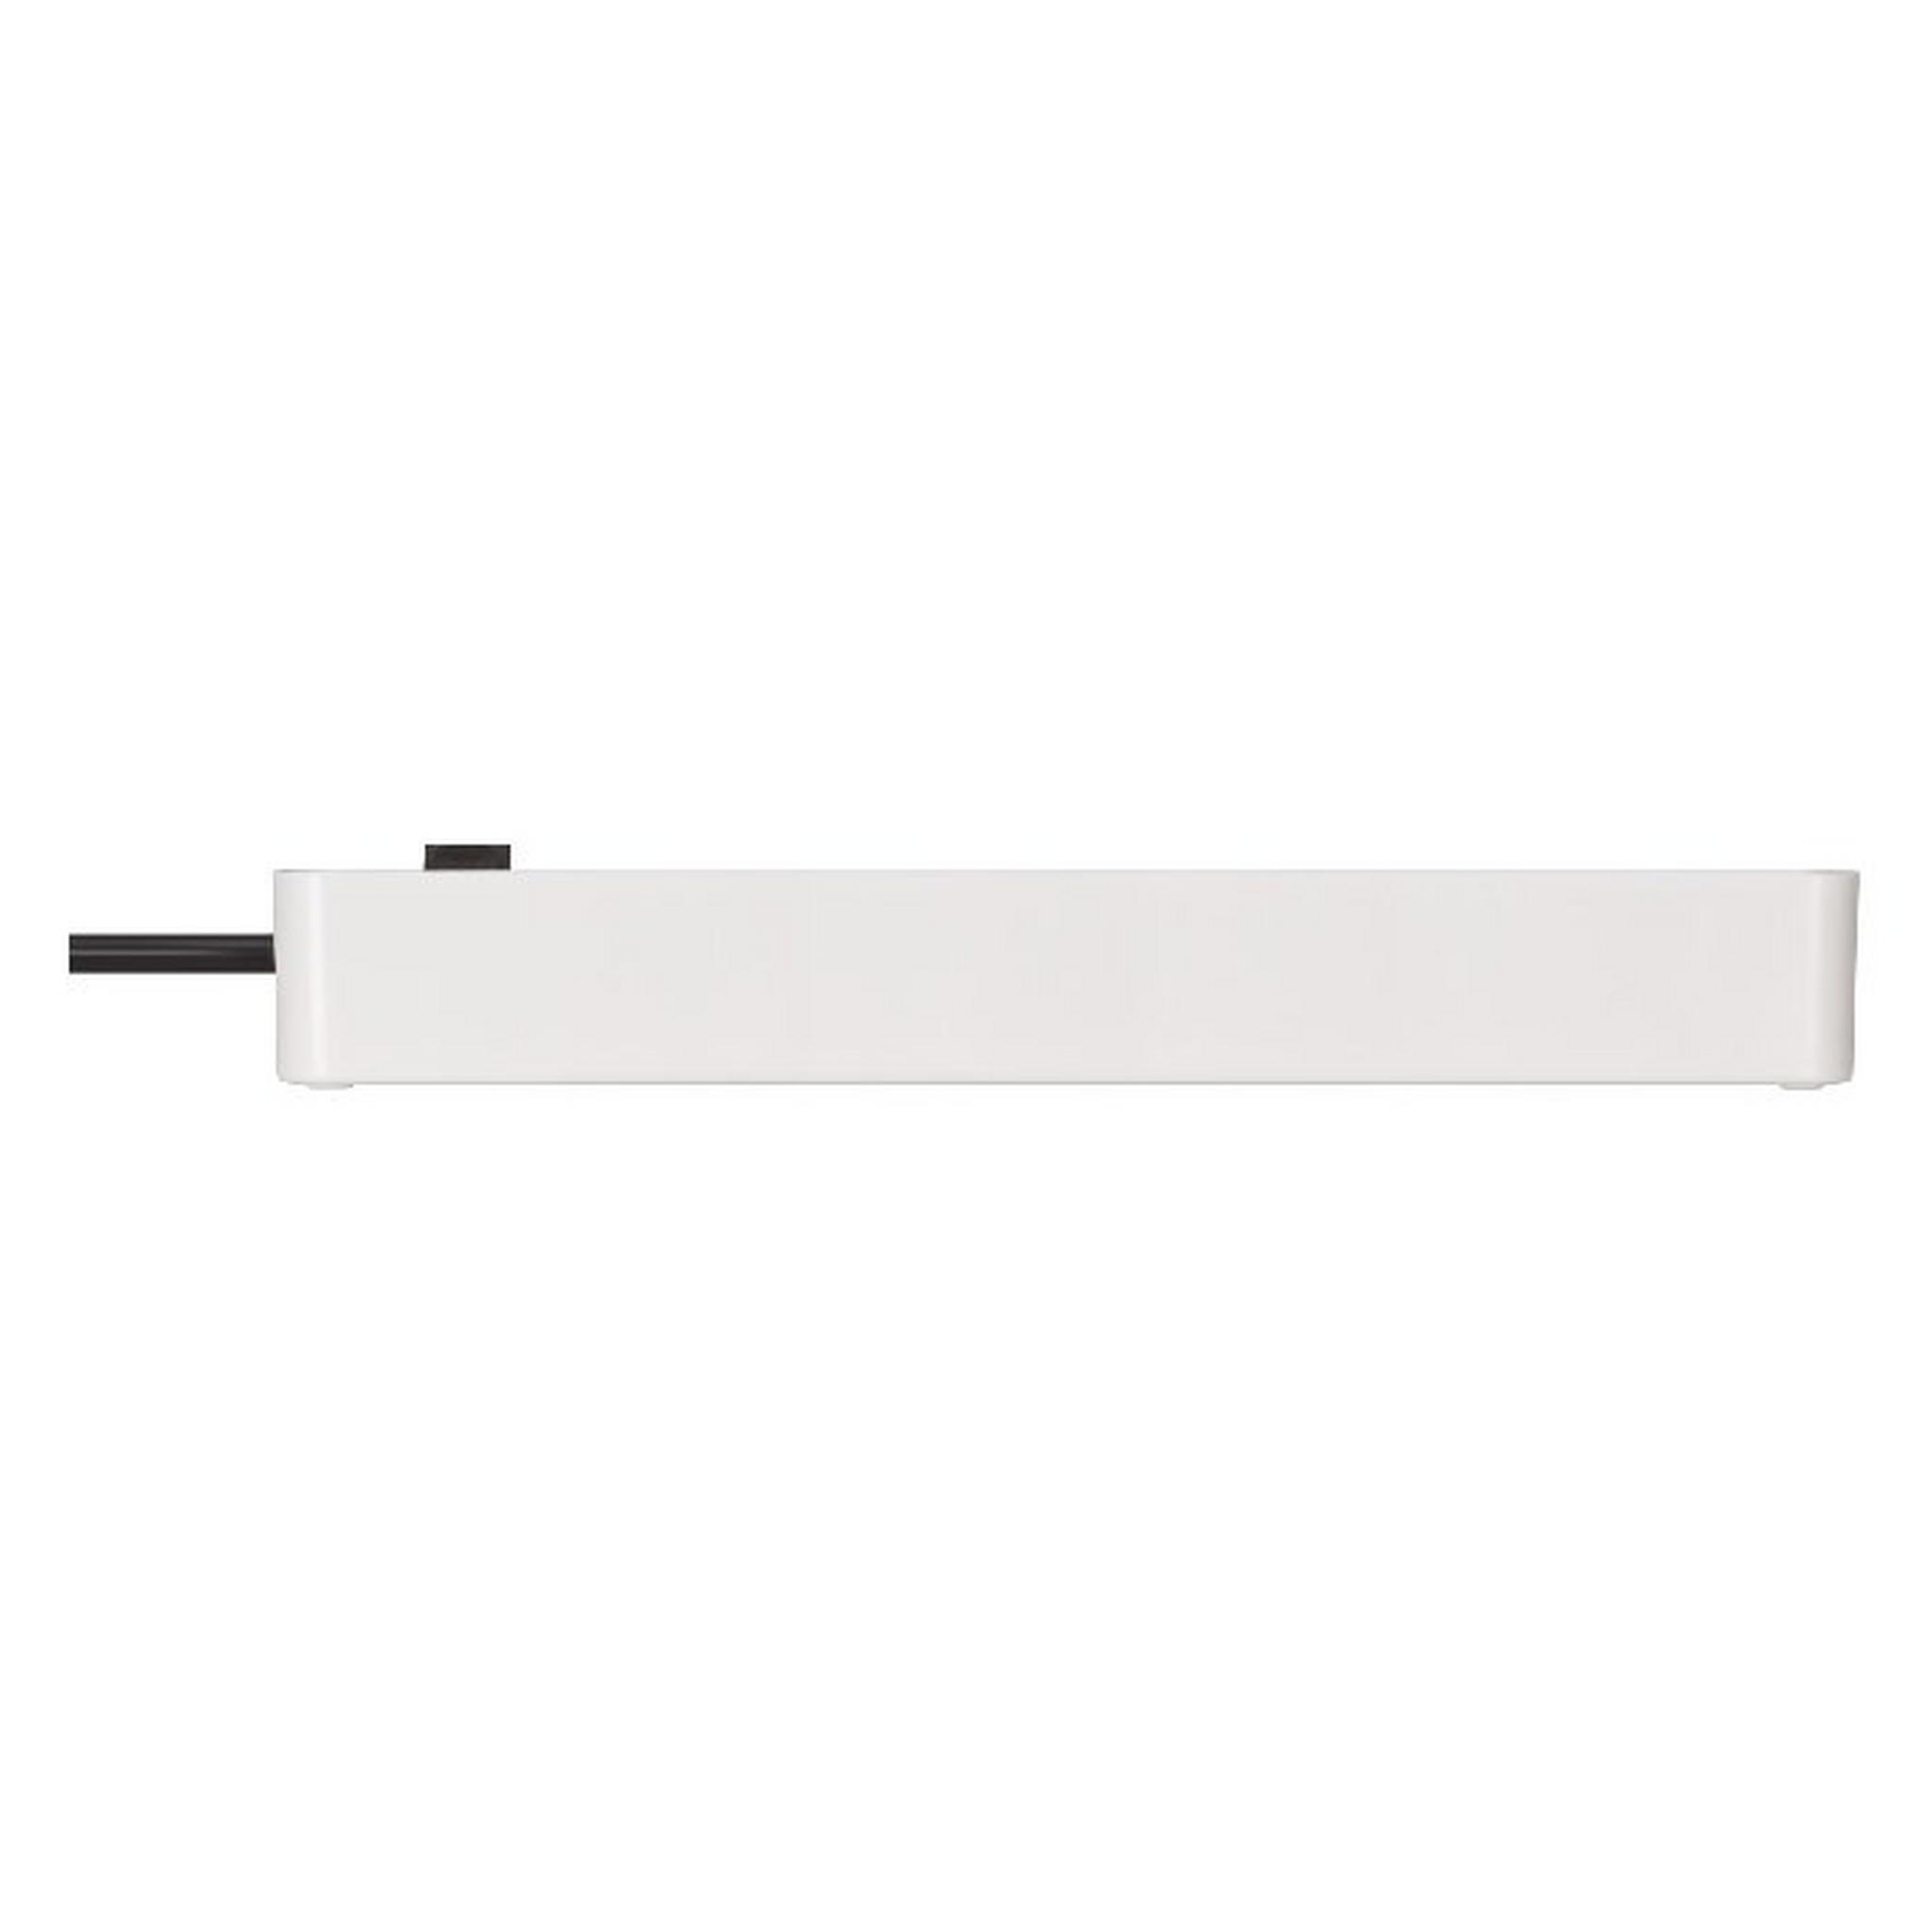 Hama Brennenstuhl 4 way 3m 2 USB extension - White